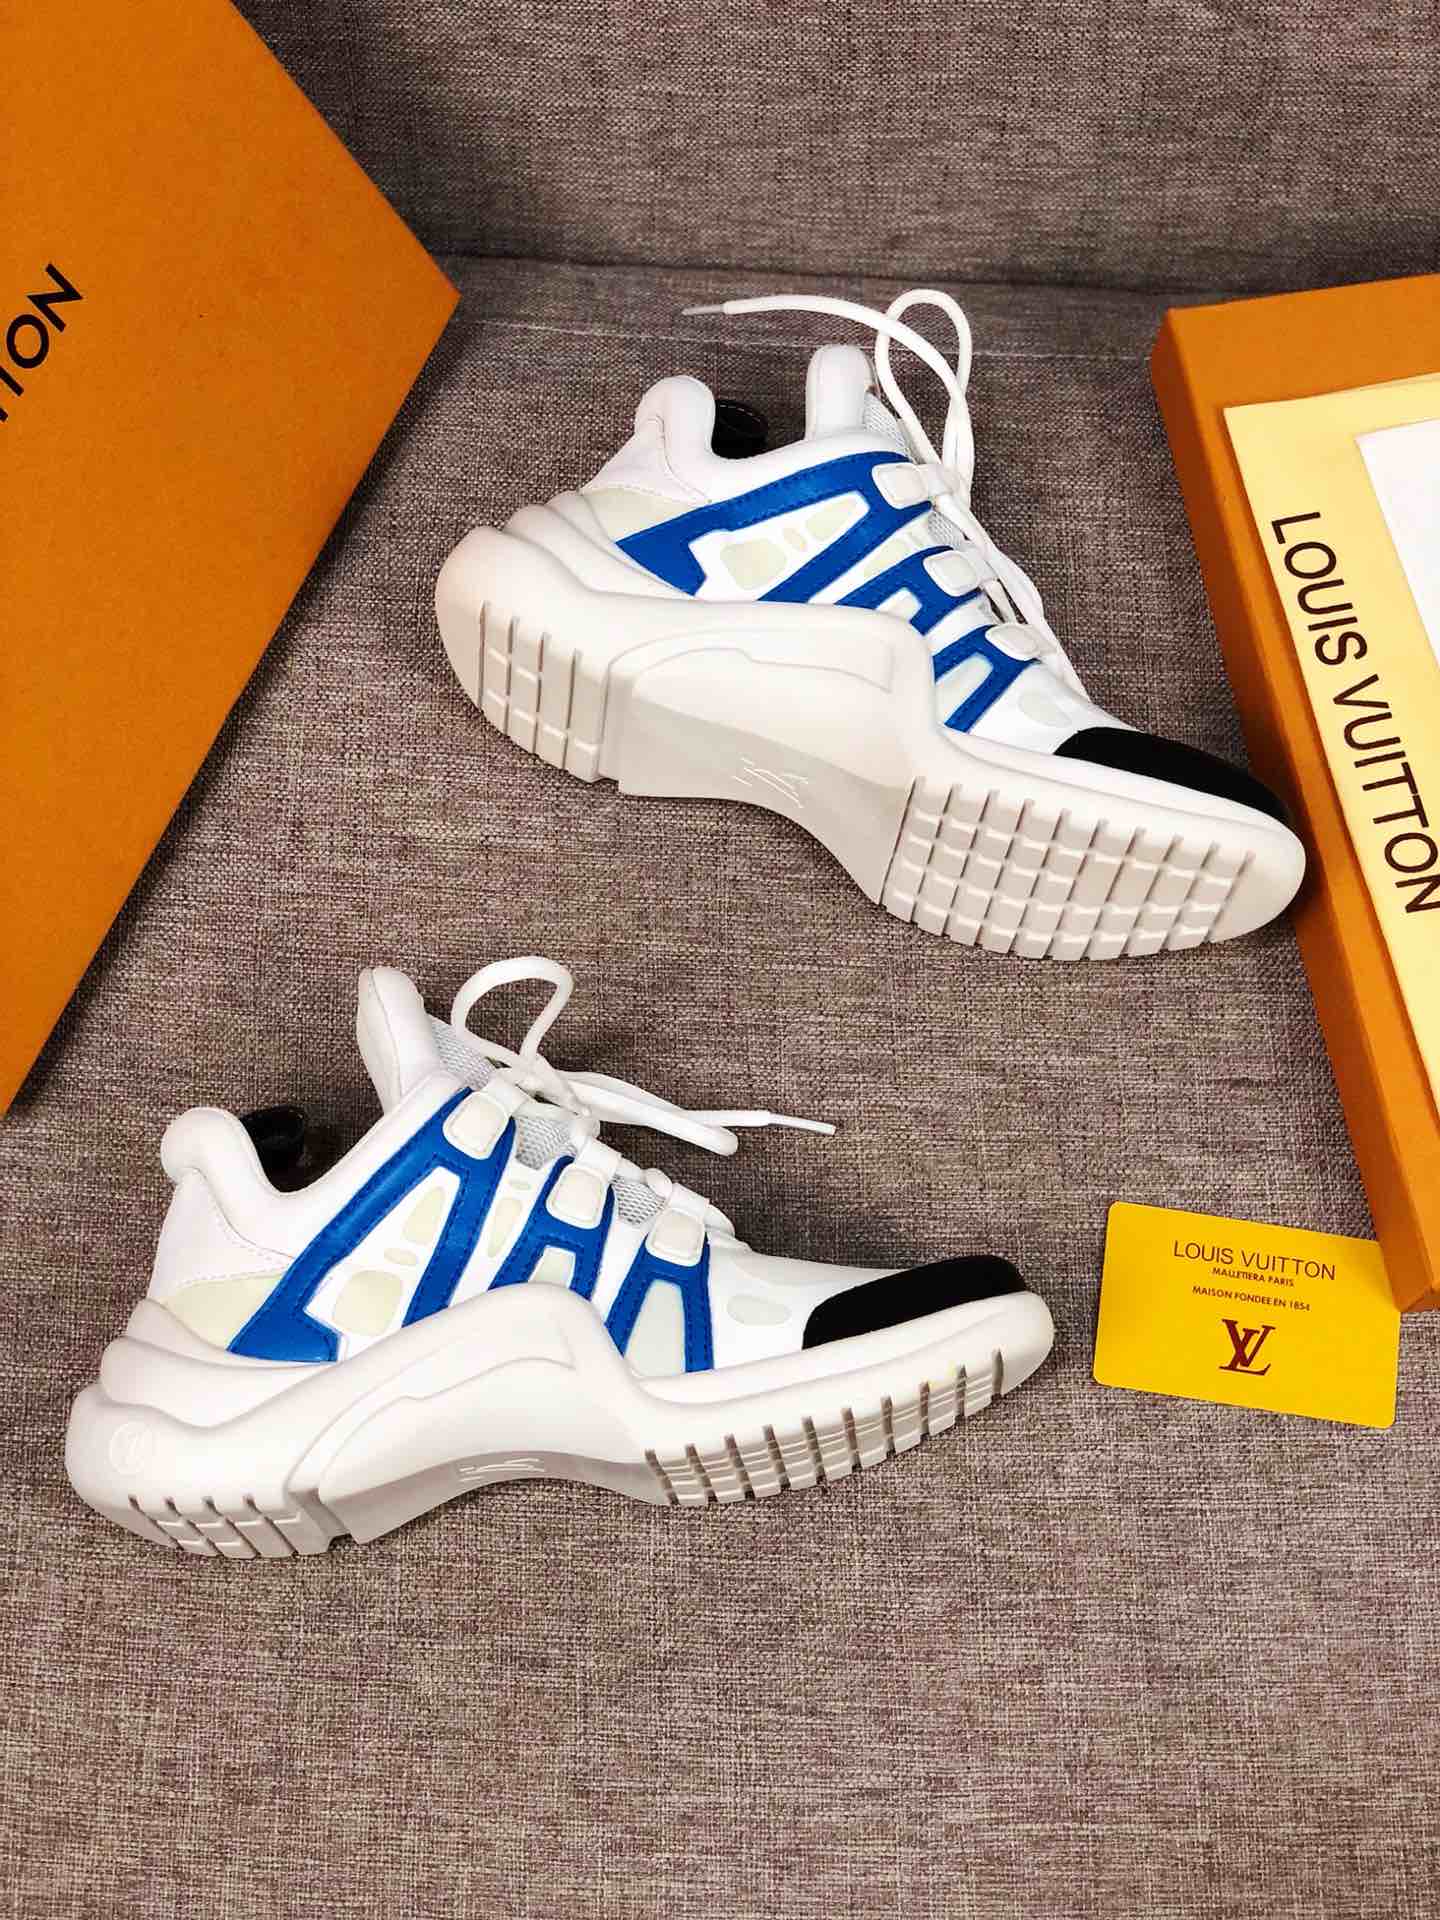 VO - LUV Archlight Blue White Black Sneaker